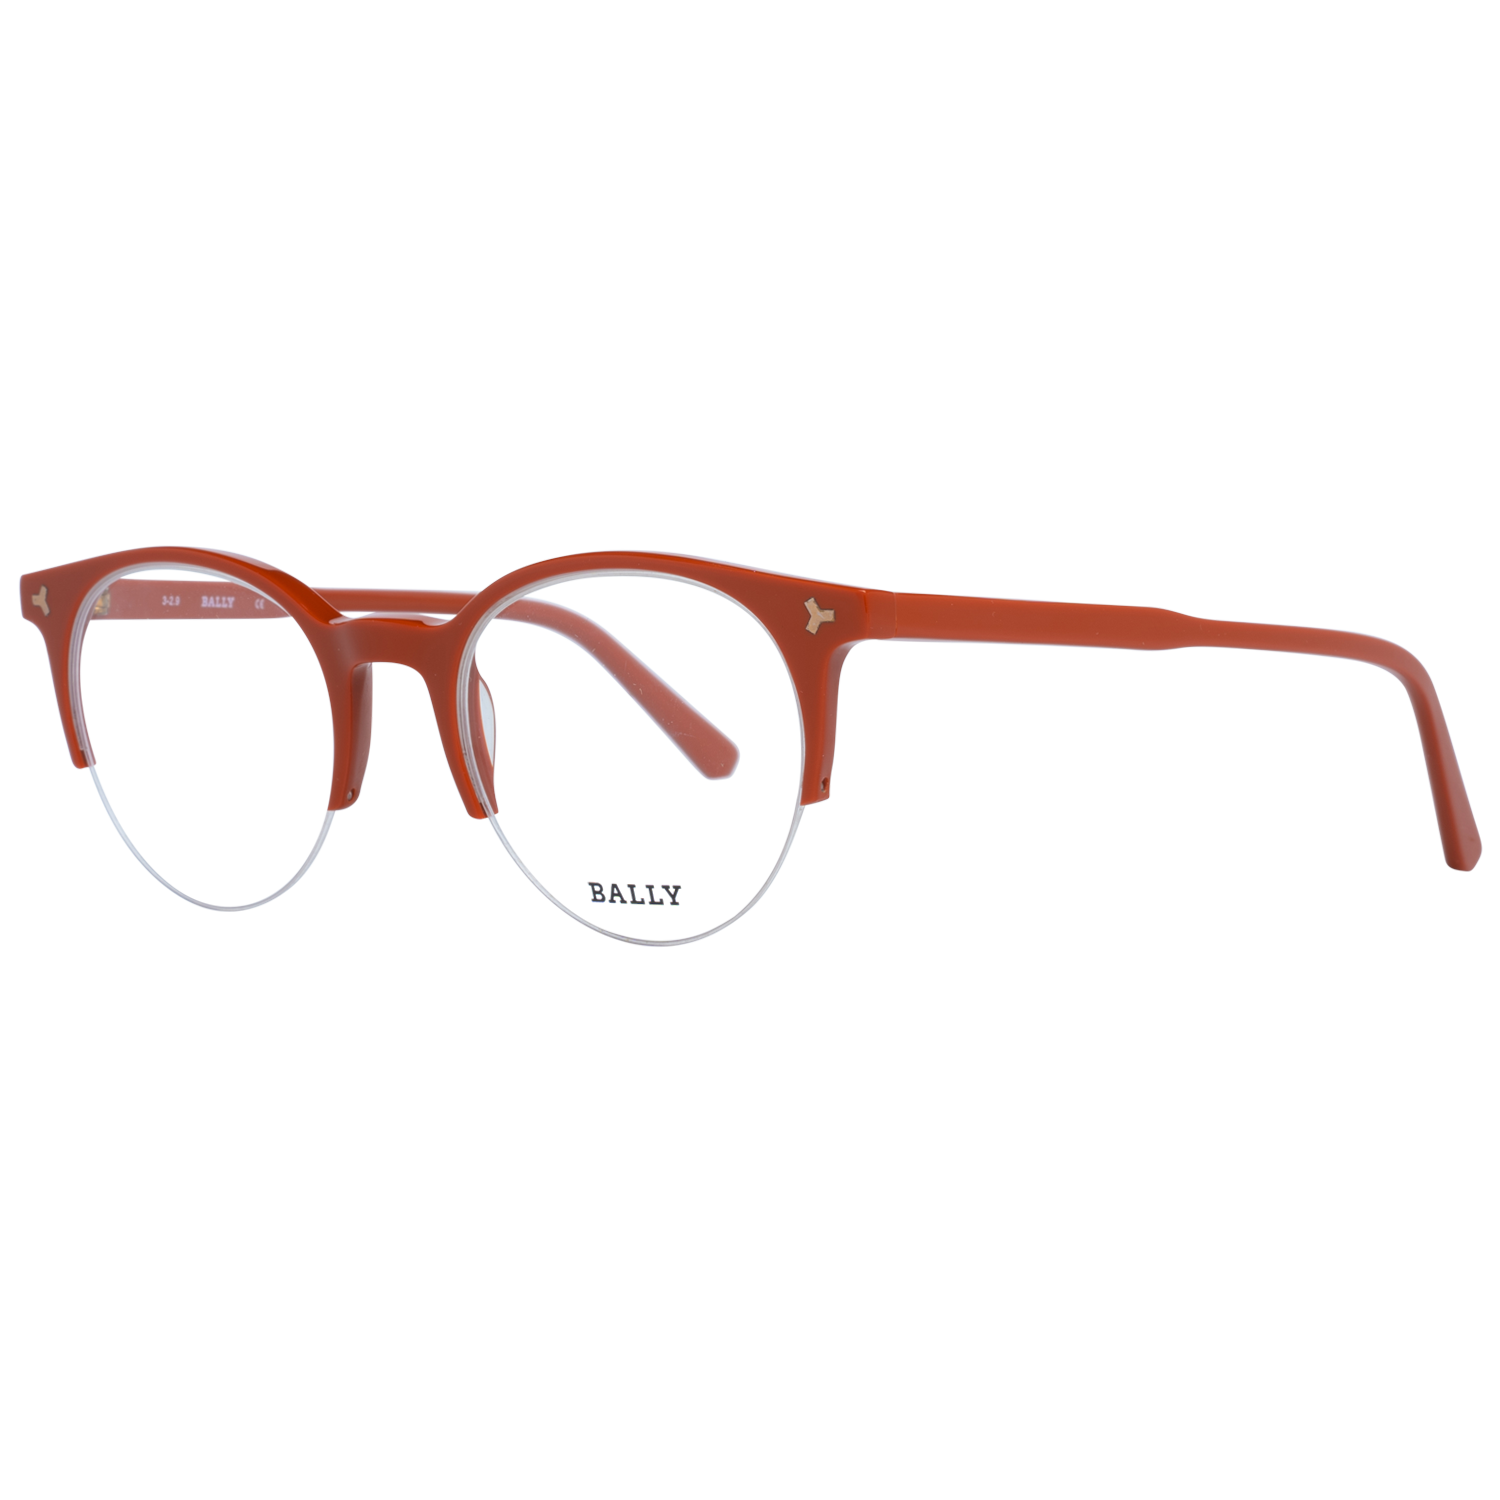 Bally Optical Frame Bally Eyeglasses Frames BY5018 042 Eyeglasses Eyewear UK USA Australia 